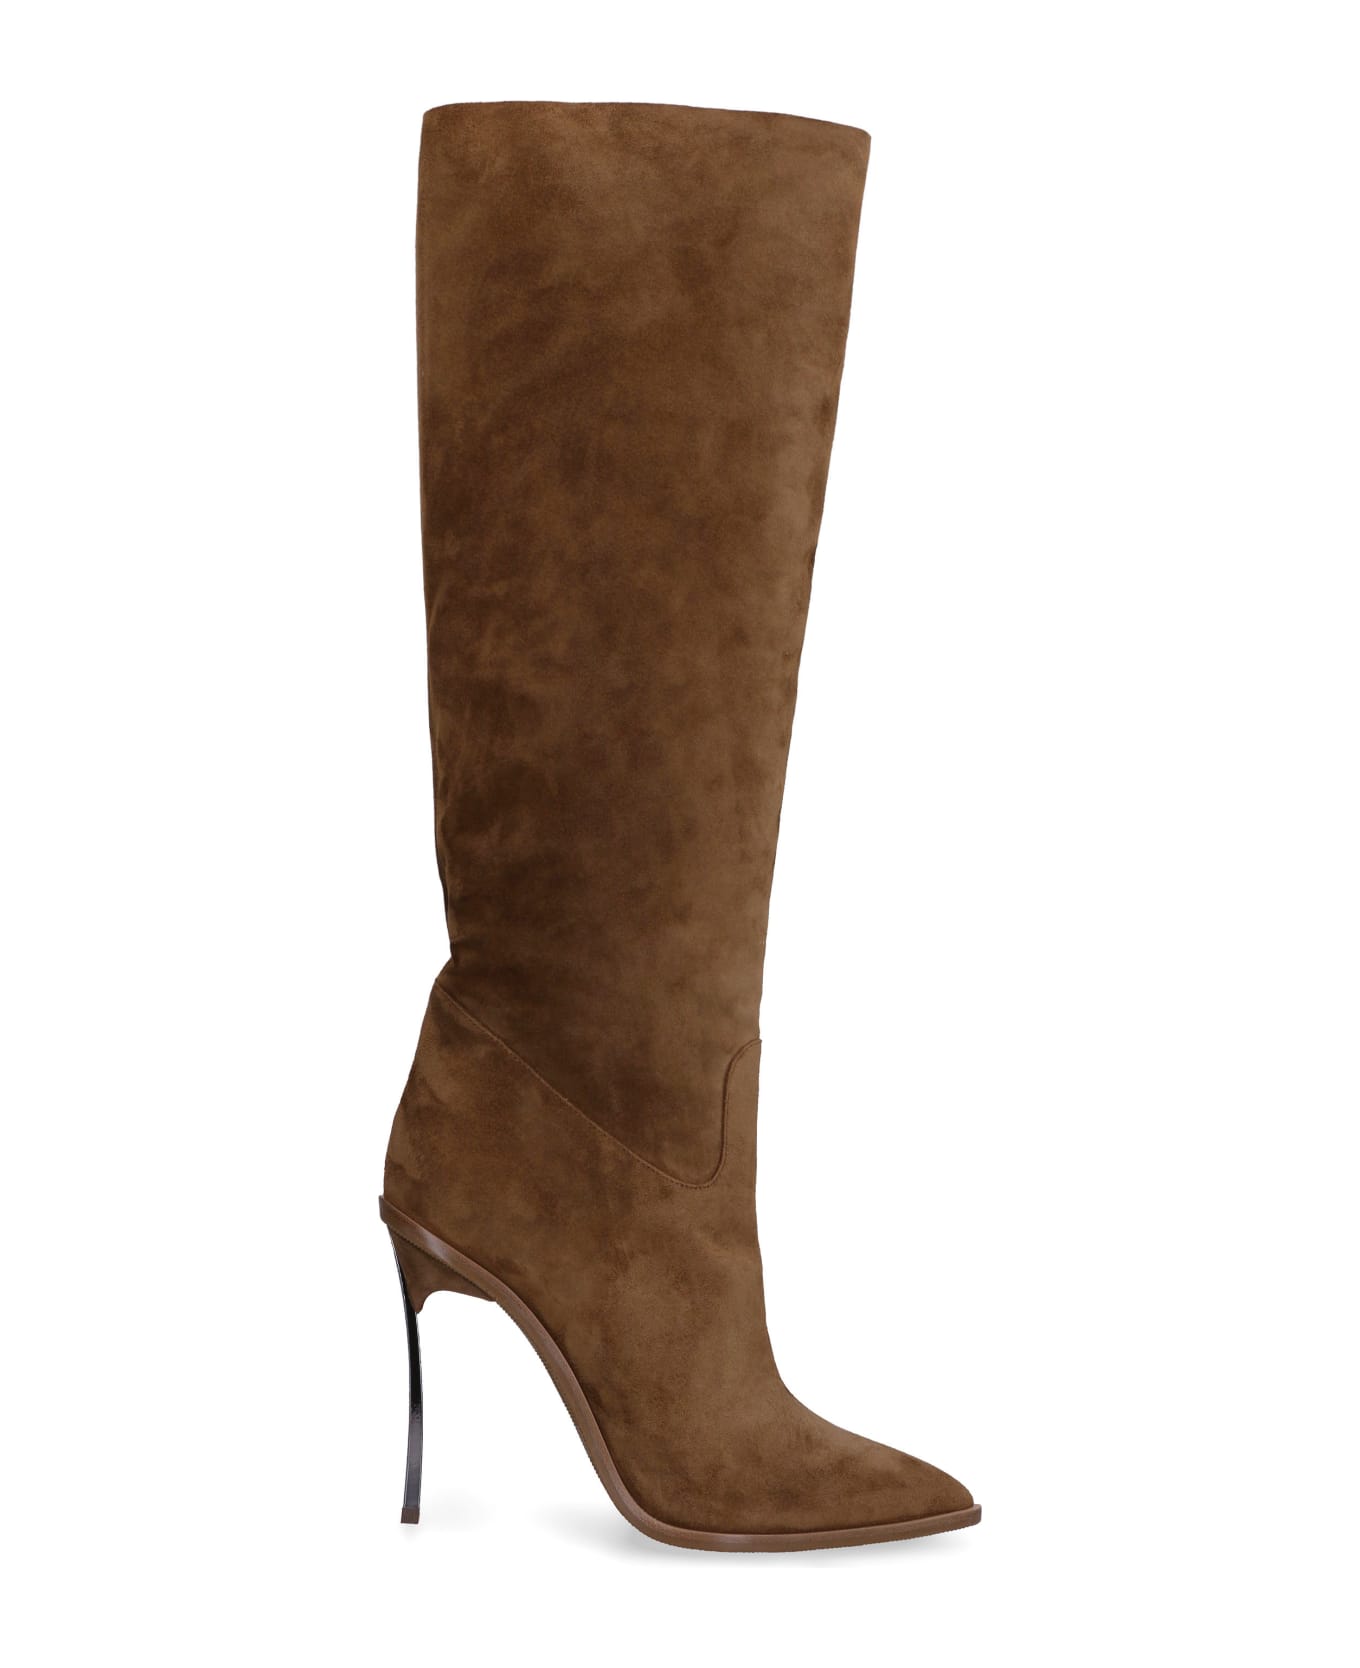 Casadei Suede Knee High Boots - brown